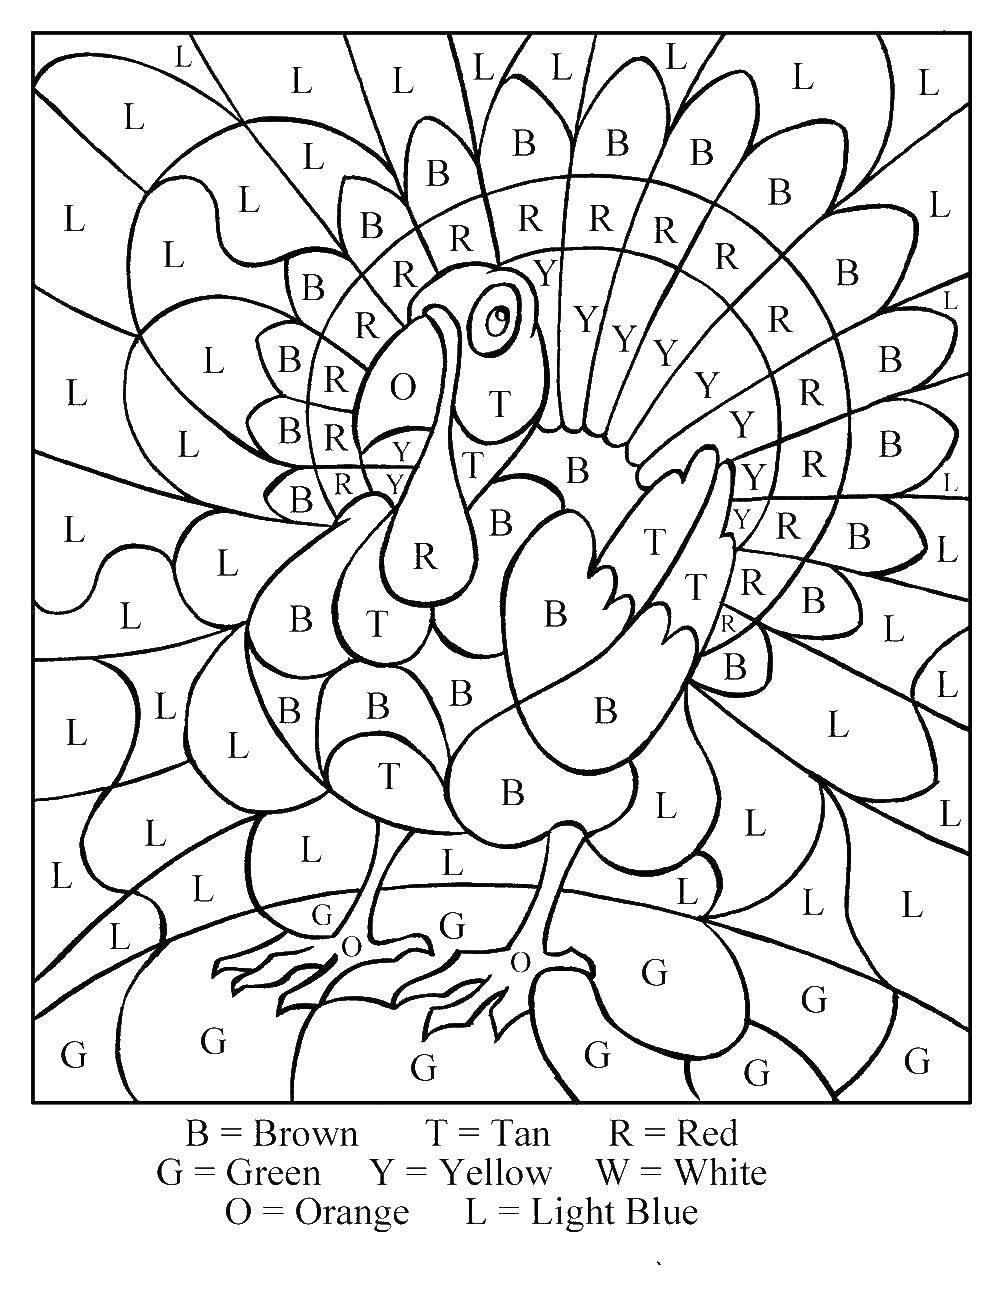 Coloring Turkey. Category day blagodarenie. Tags:  turkeys, poultry.